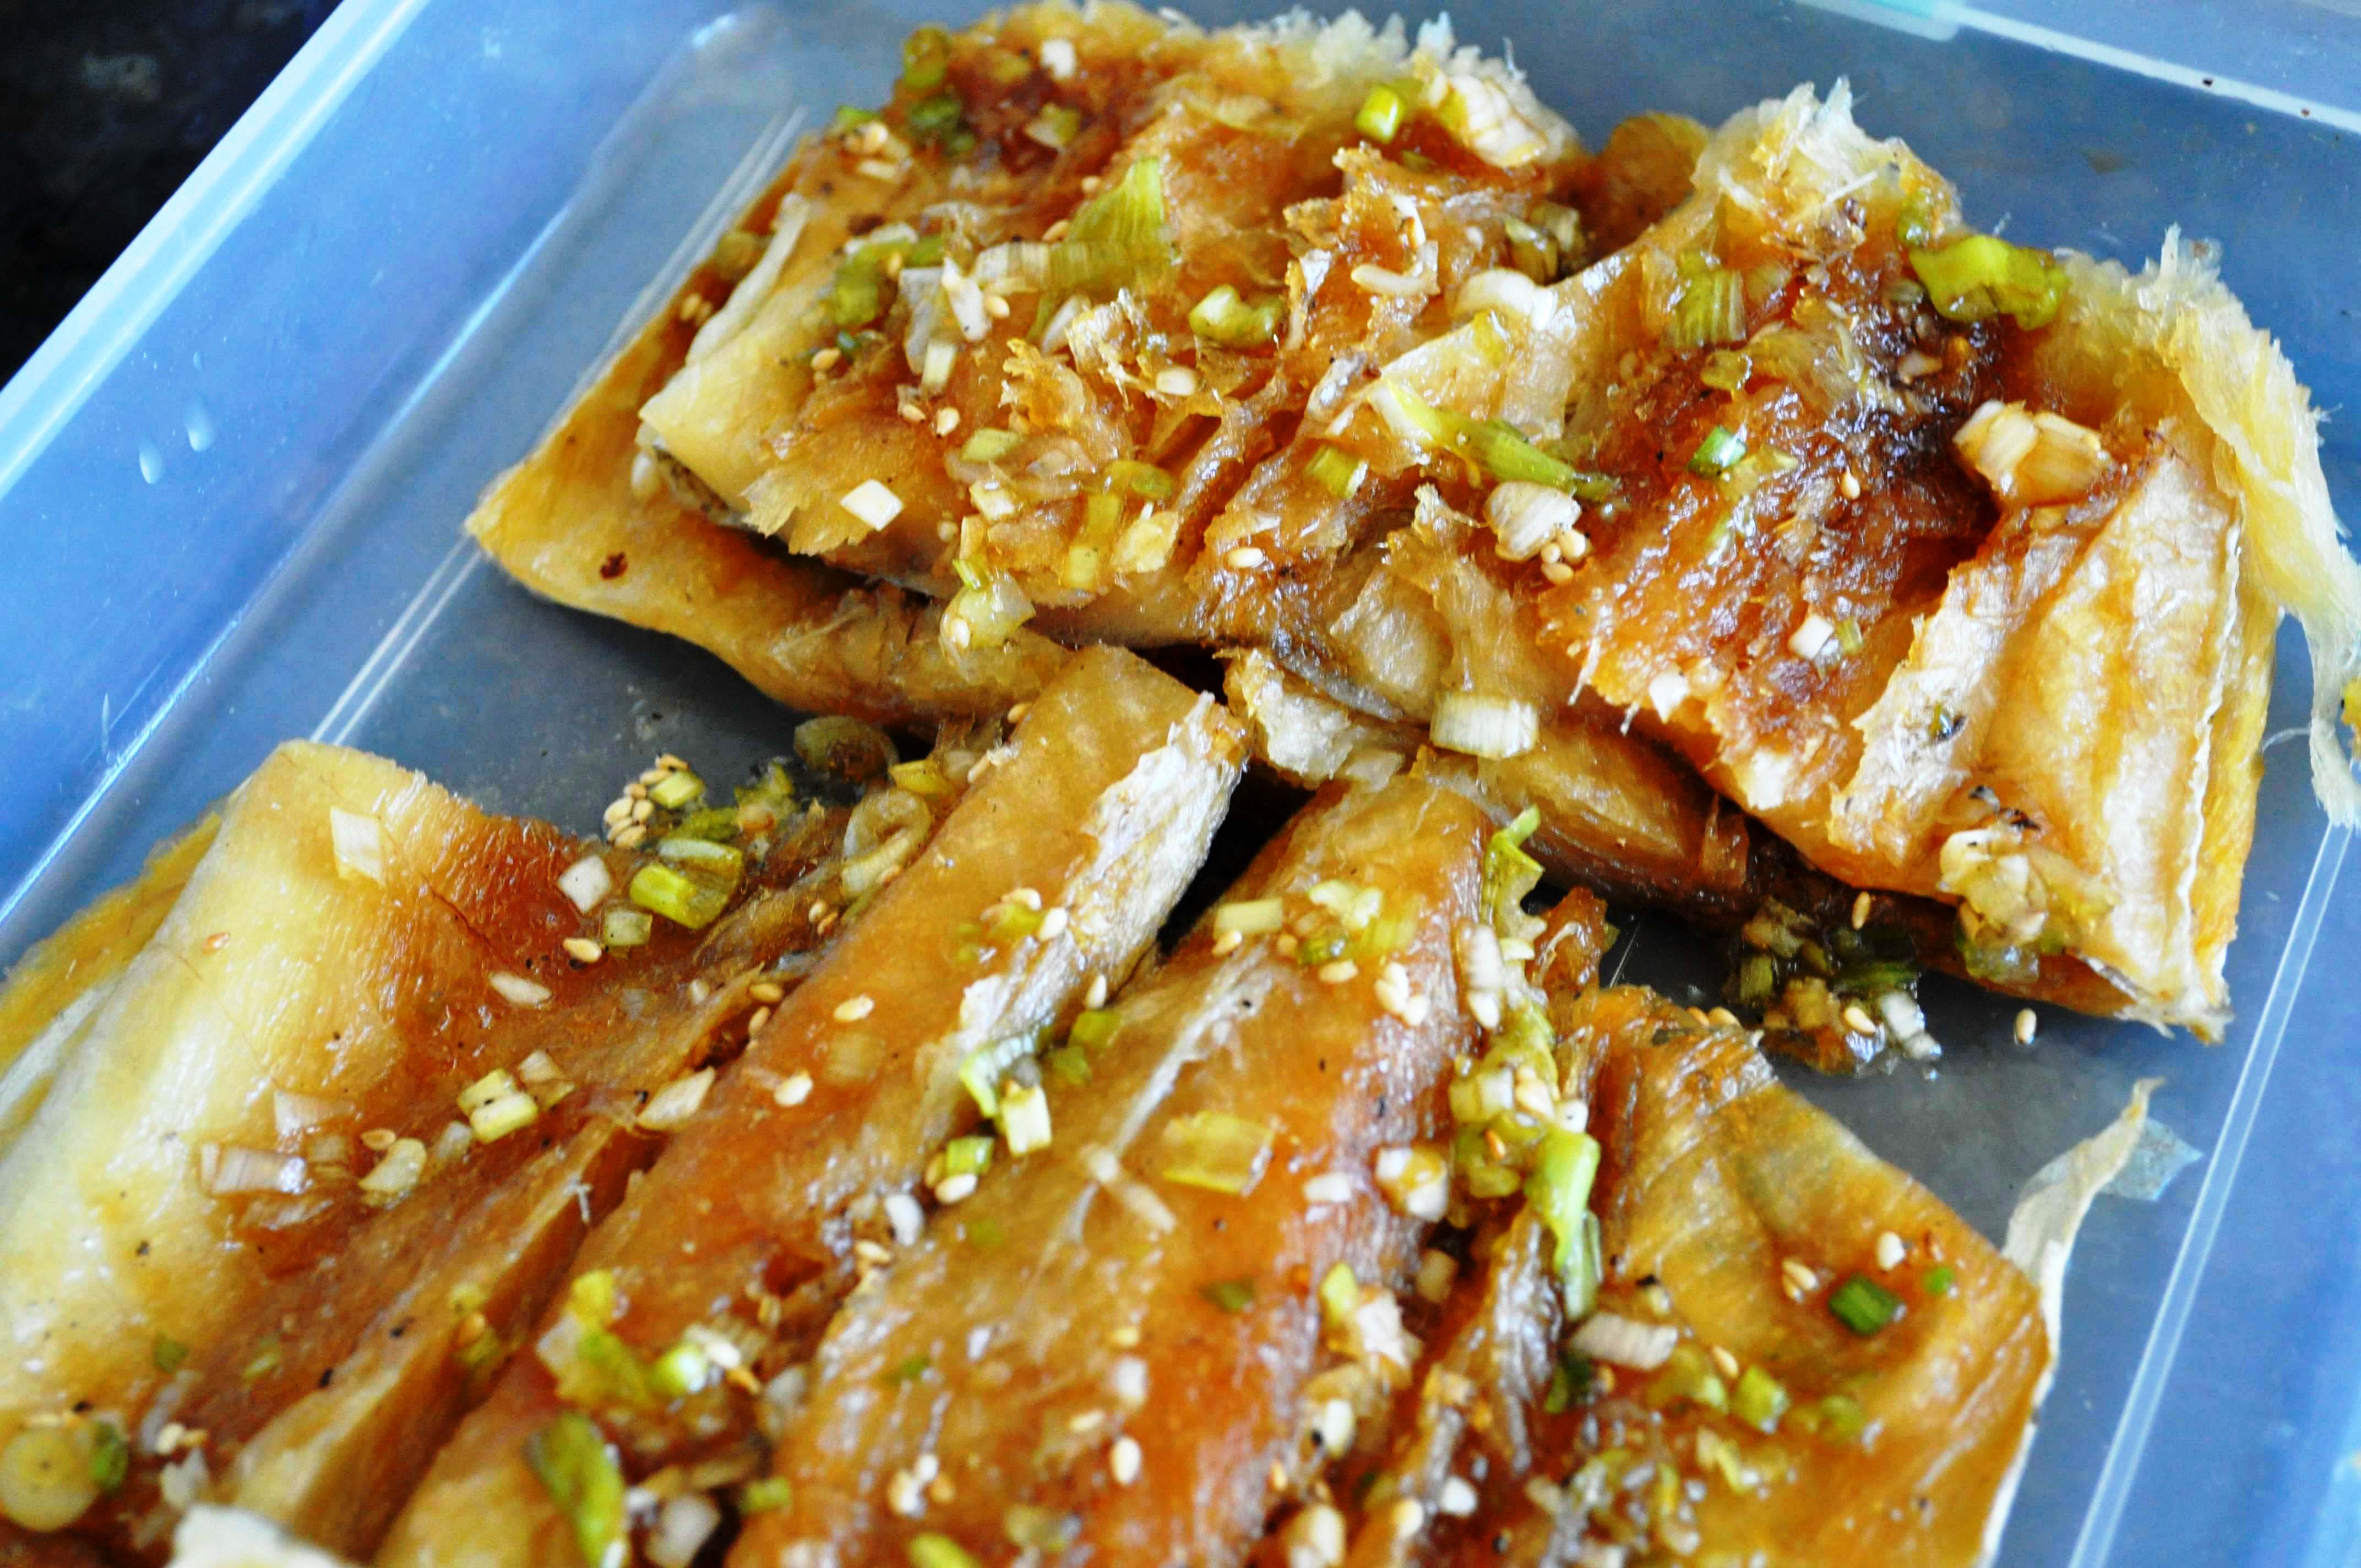 marinated dried pollock (bugeo)